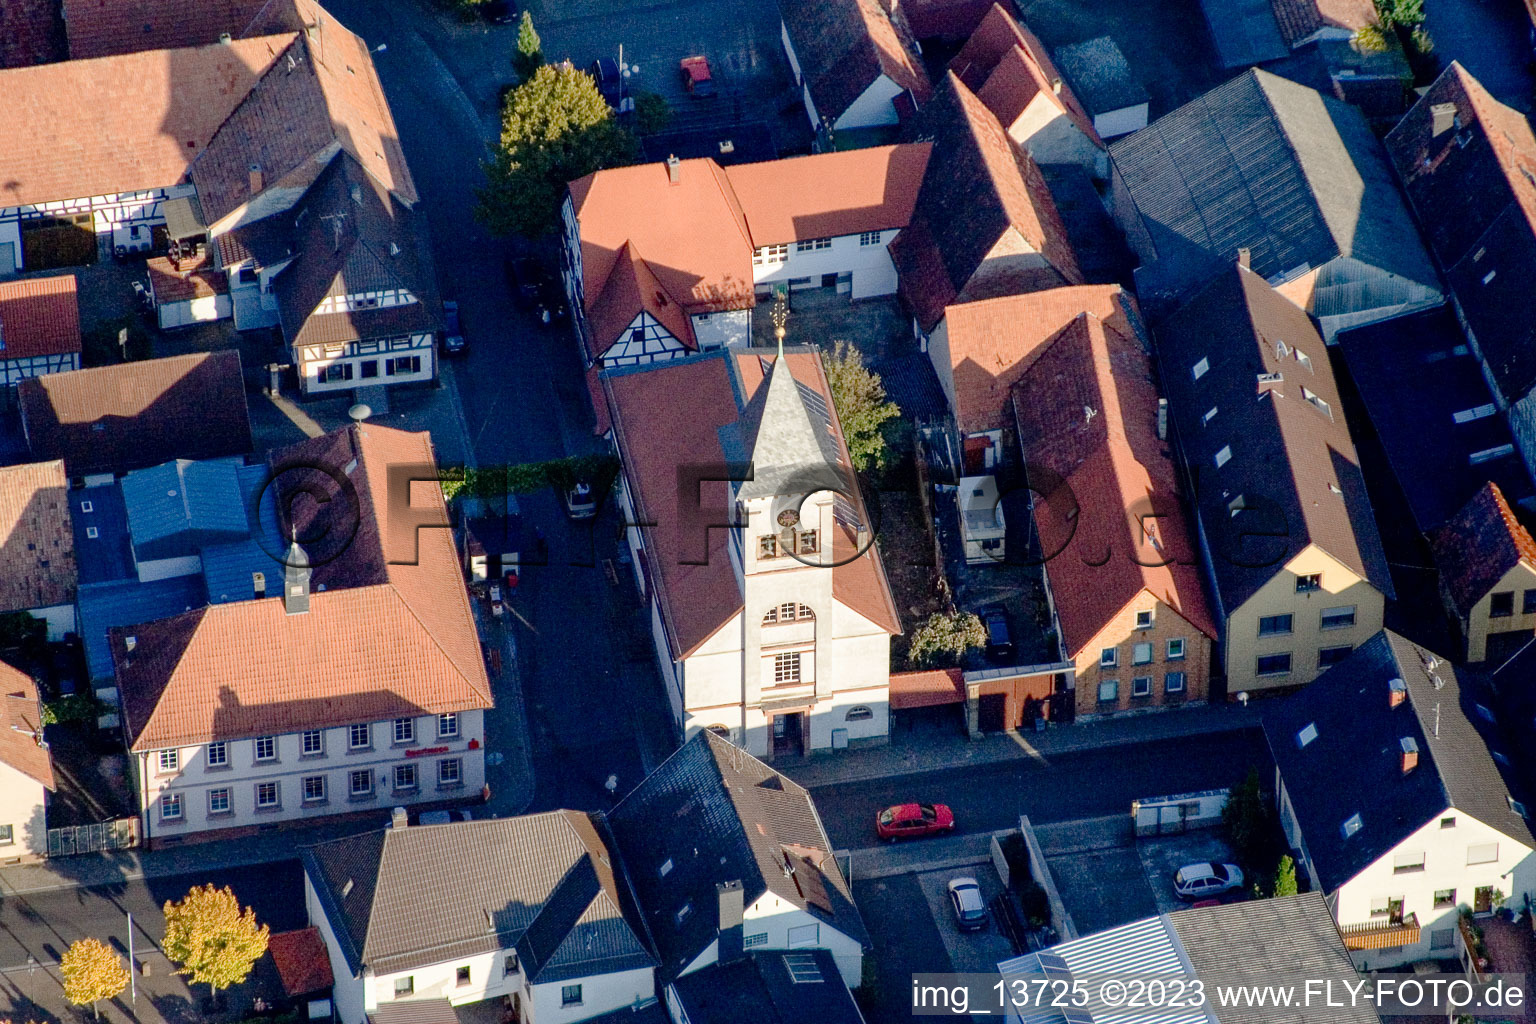 Church building in the village of in the district Ingenheim in Billigheim-Ingenheim in the state Rhineland-Palatinate